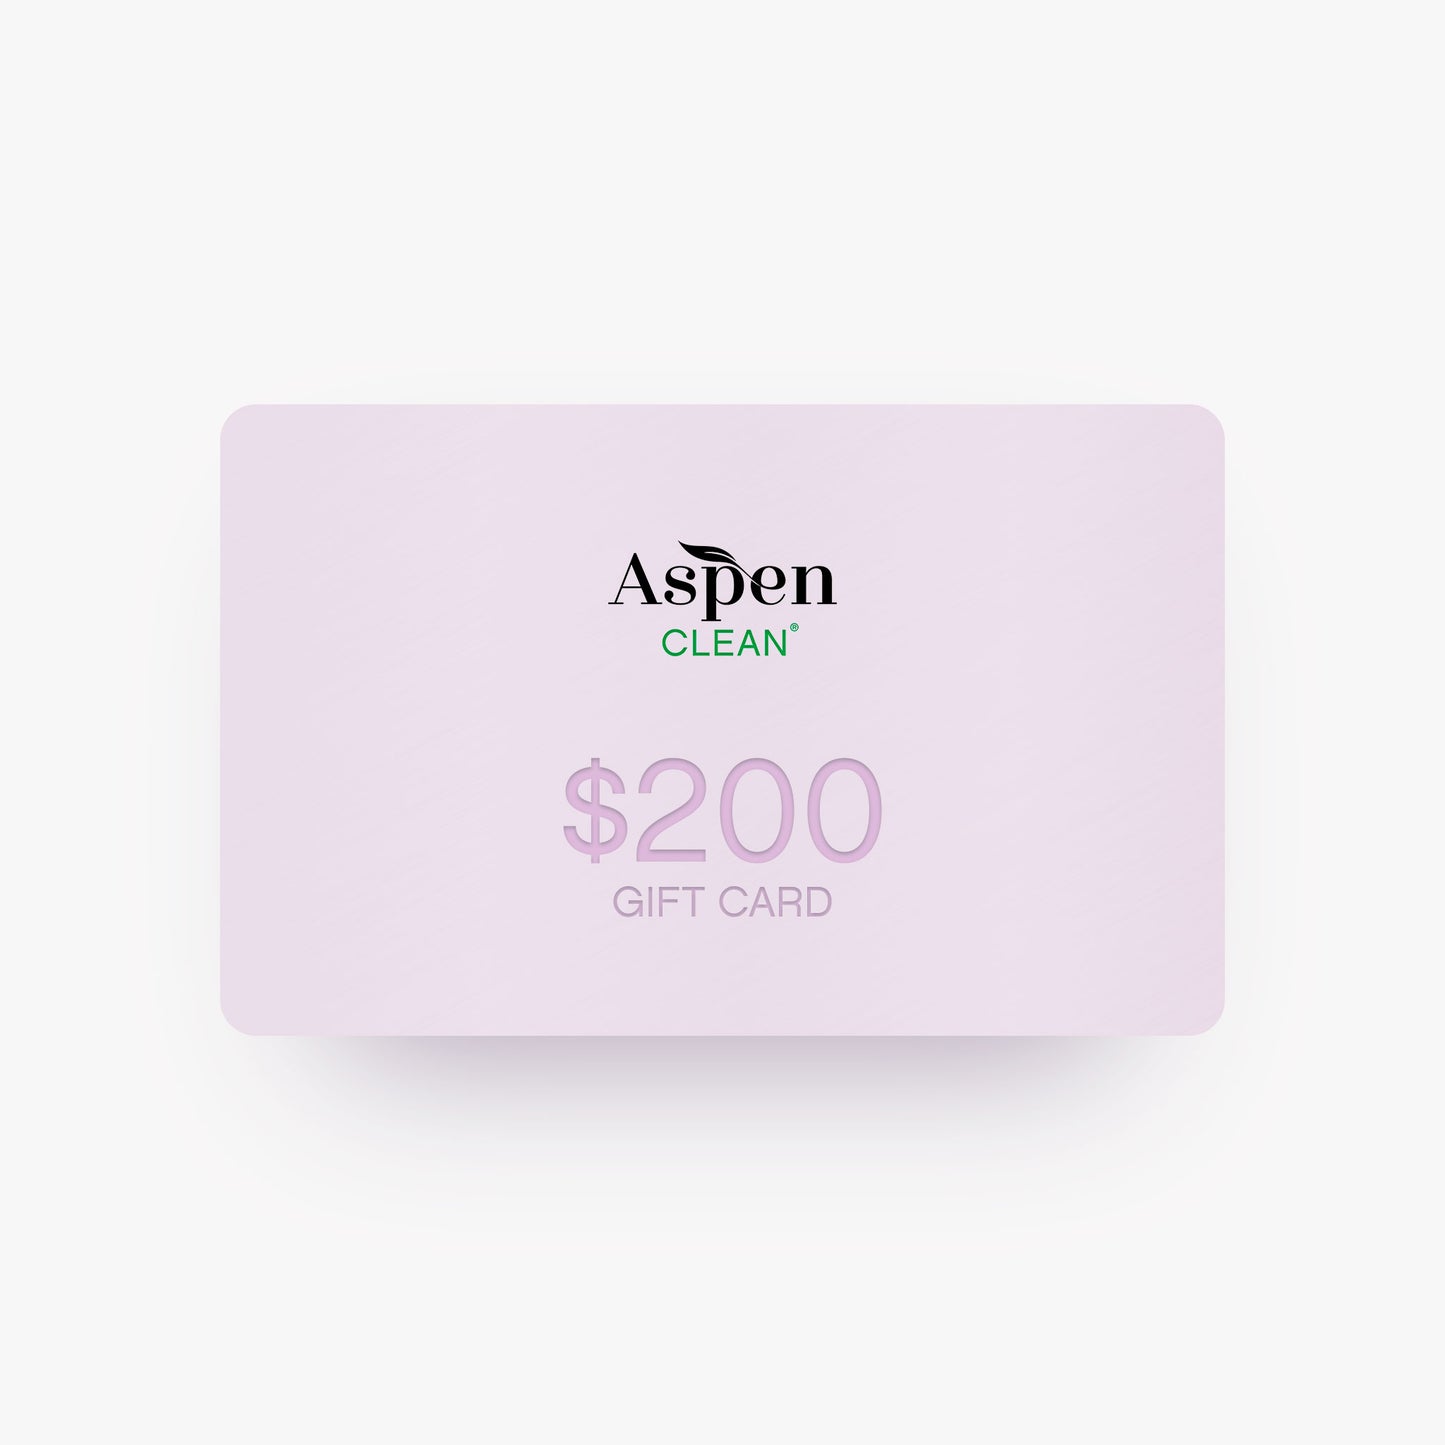 AspenClean e-gift card $200